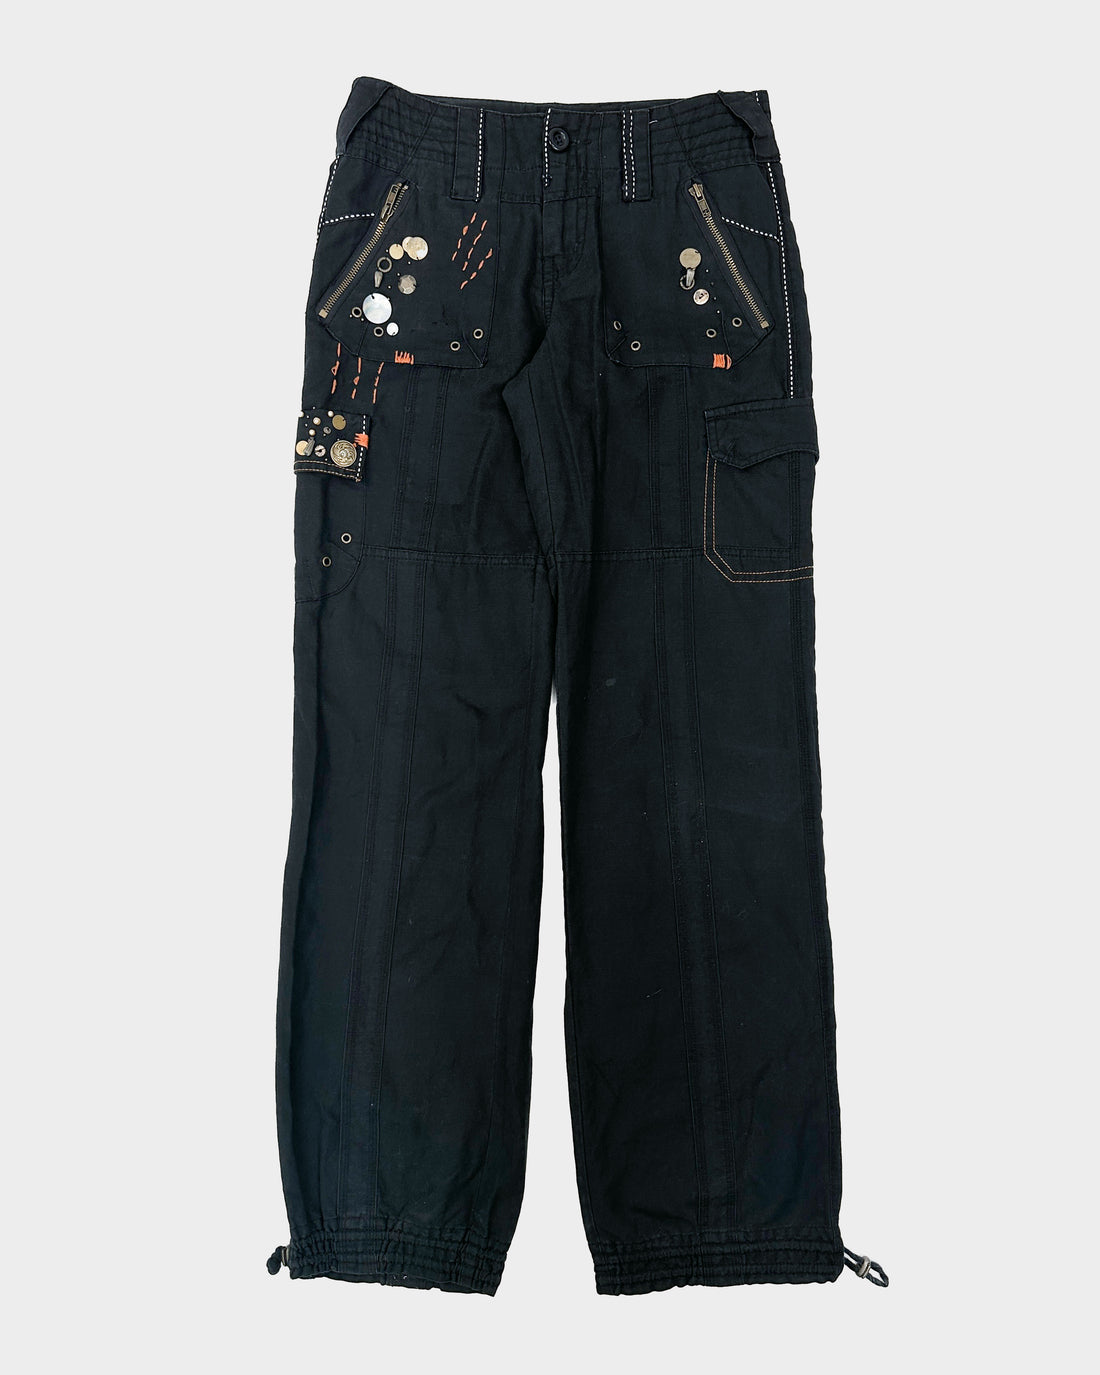 DKNY Decorated Black Cargo Pants 90's